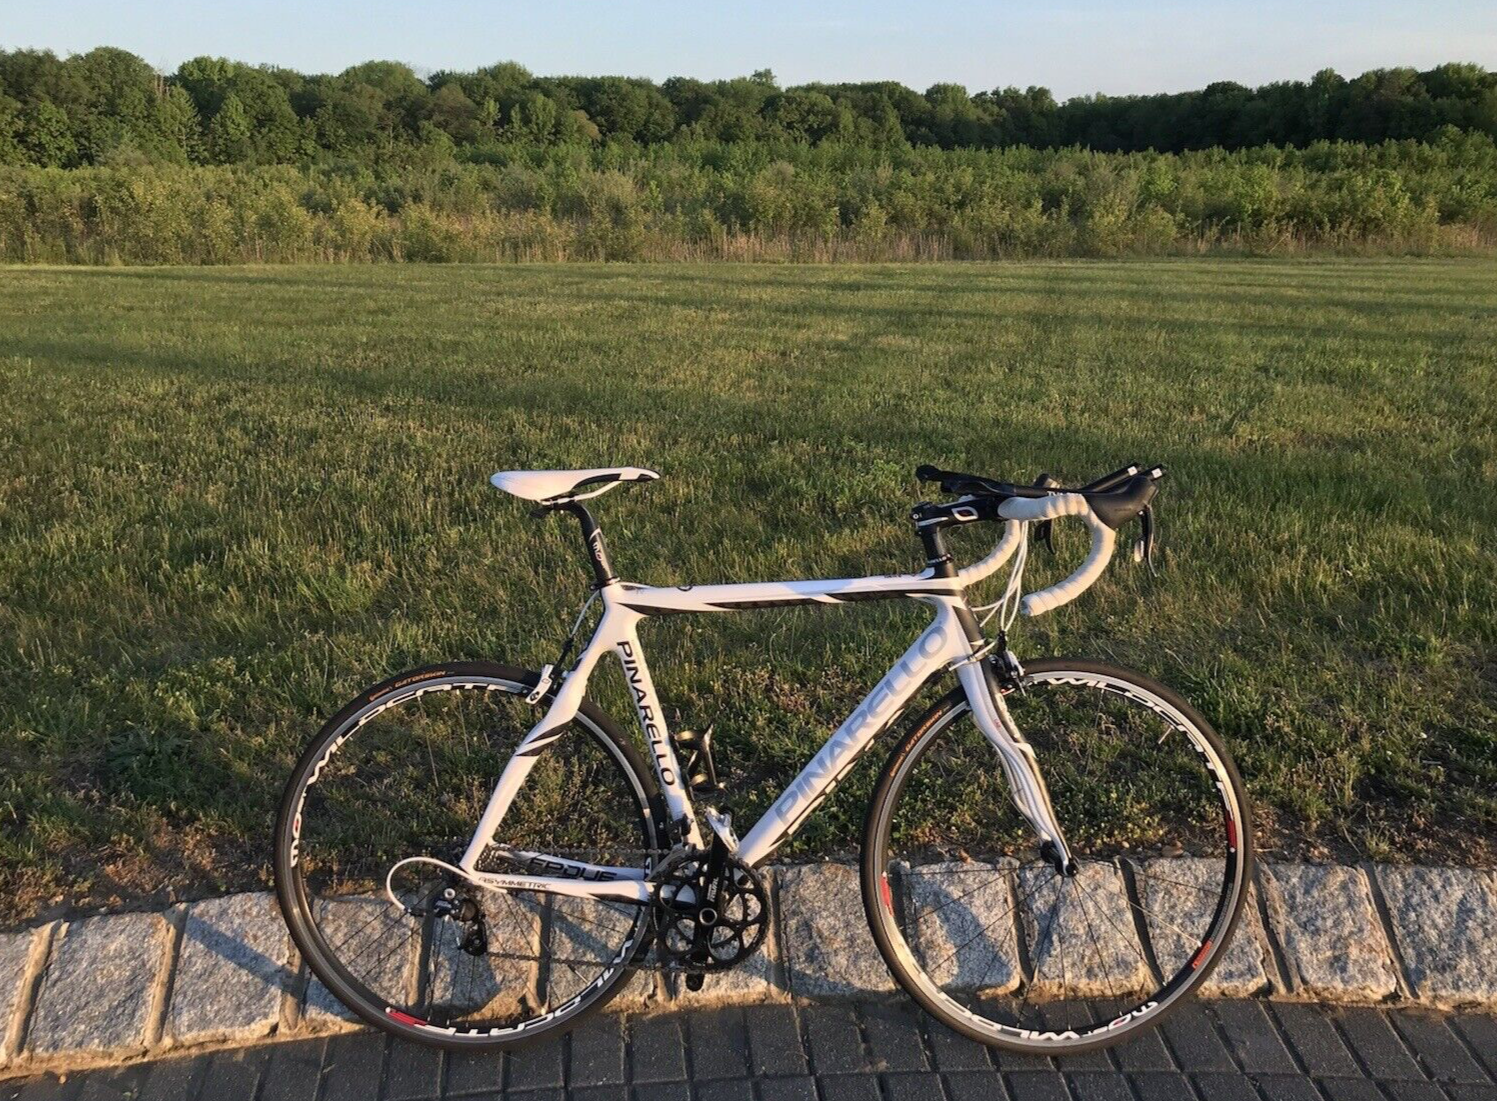 Bicycle for Sale: Pinarello FP2 / Sram Rival  / Wavy Onda / Pristine (under 400 miles) in Morganville, New Jersey